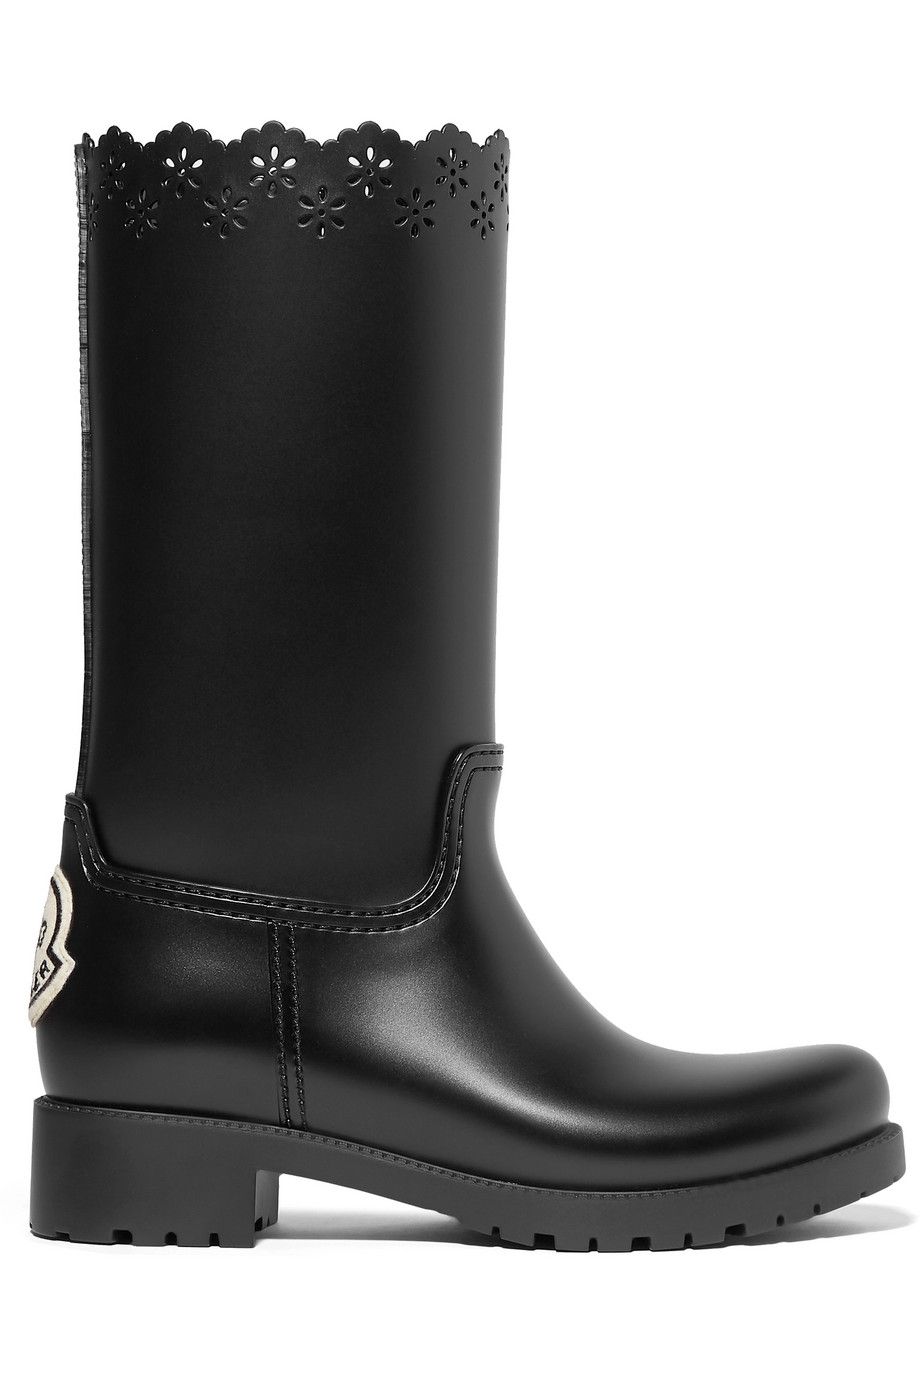 stylish rain boots for women